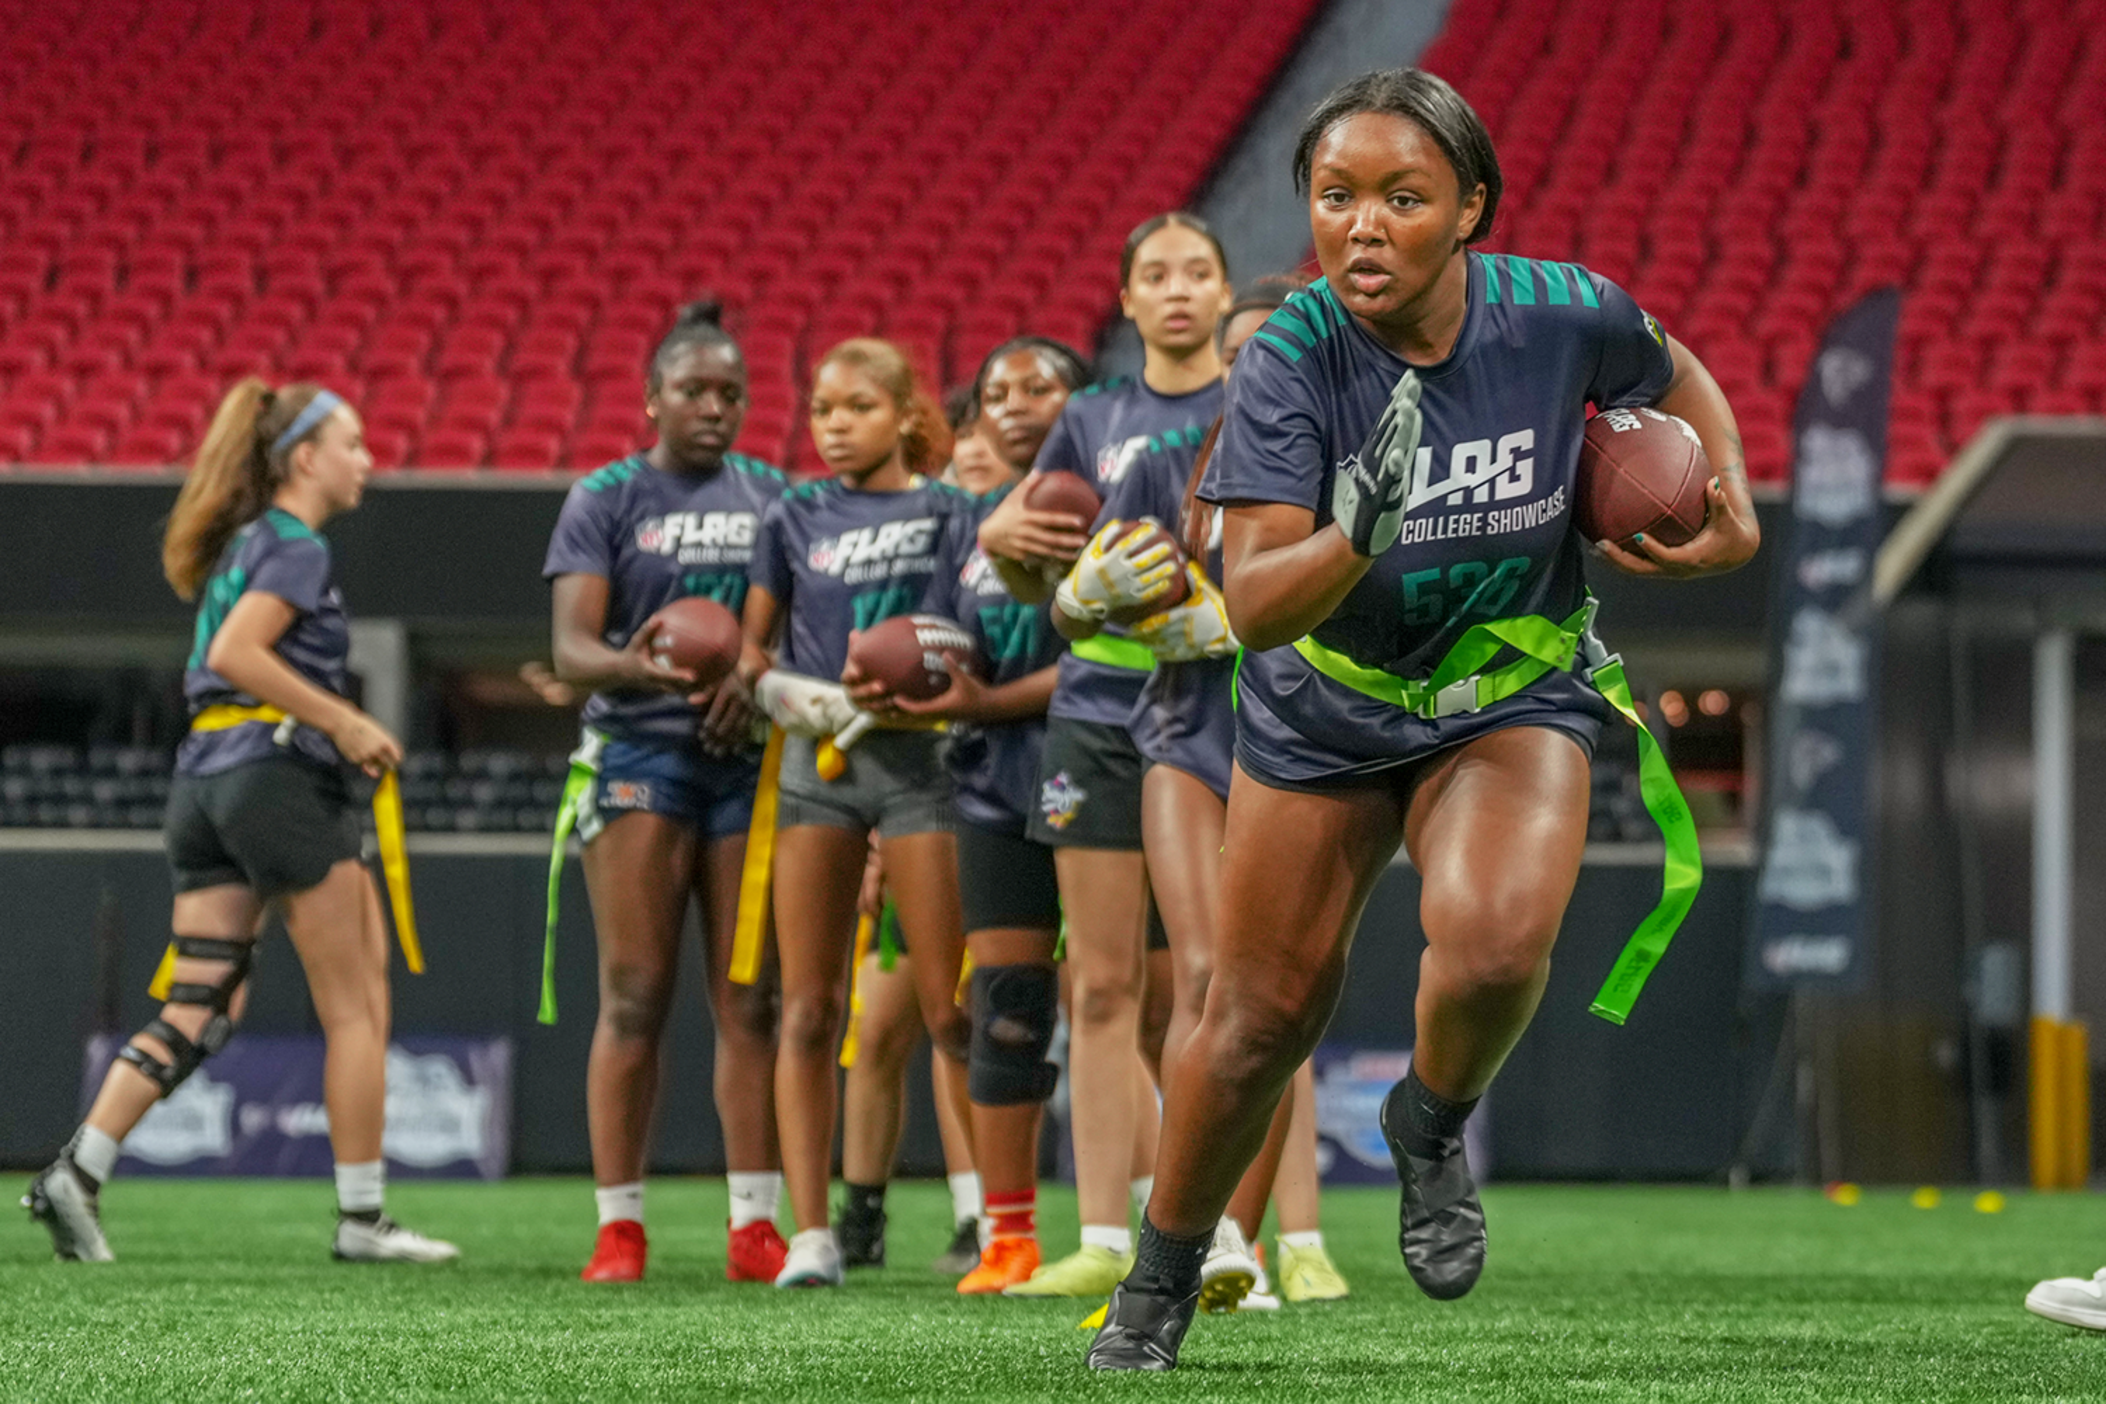 The Atlanta Falcons hosted the third-annual High School Girls Flag Football Showcase at Mercedes-Benz Stadium.